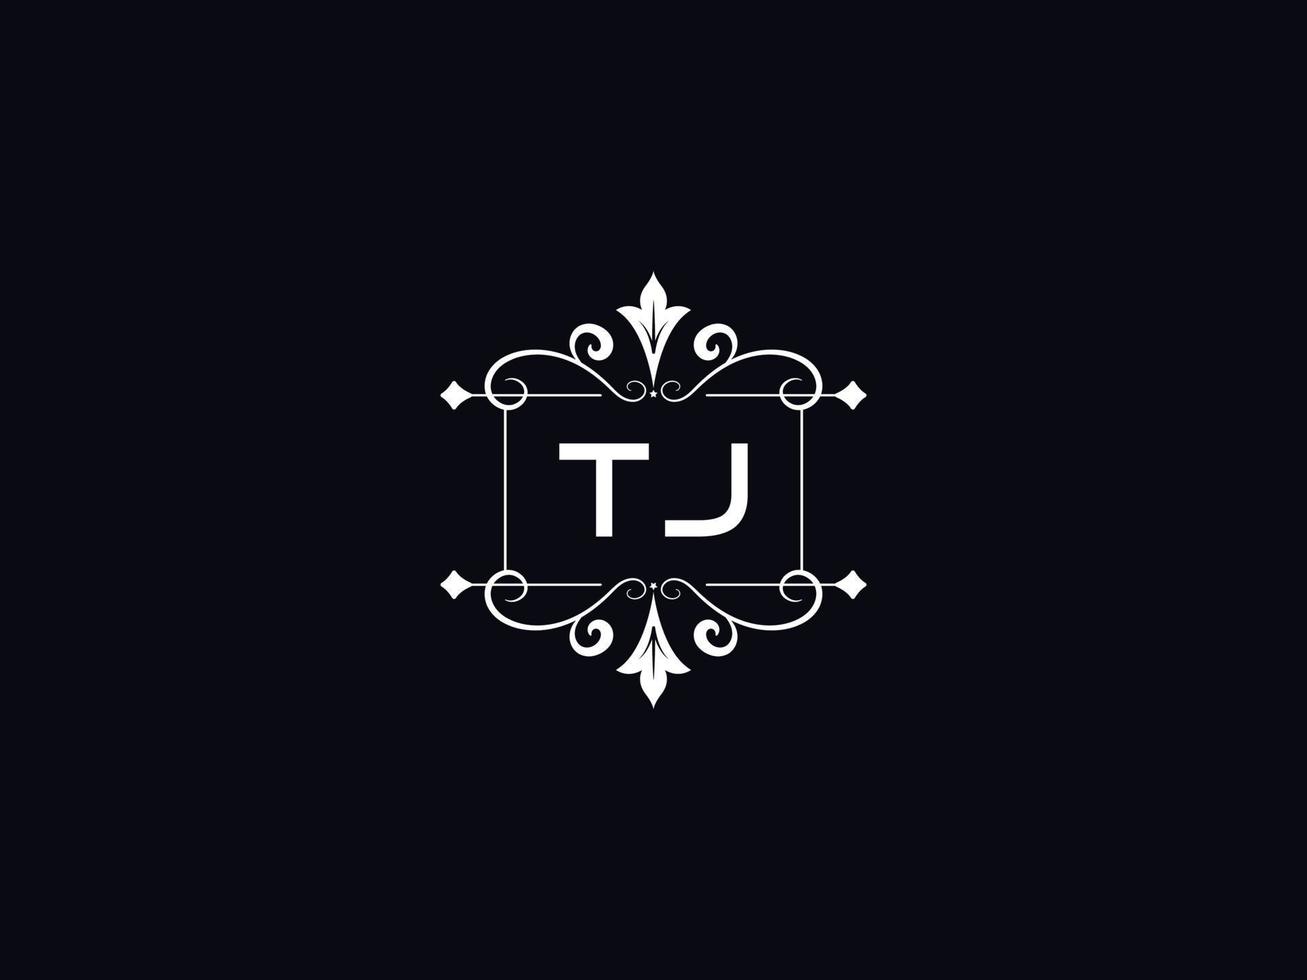 professionelles tj-logo, minimalistisches tj-luxus-logo-briefdesign vektor